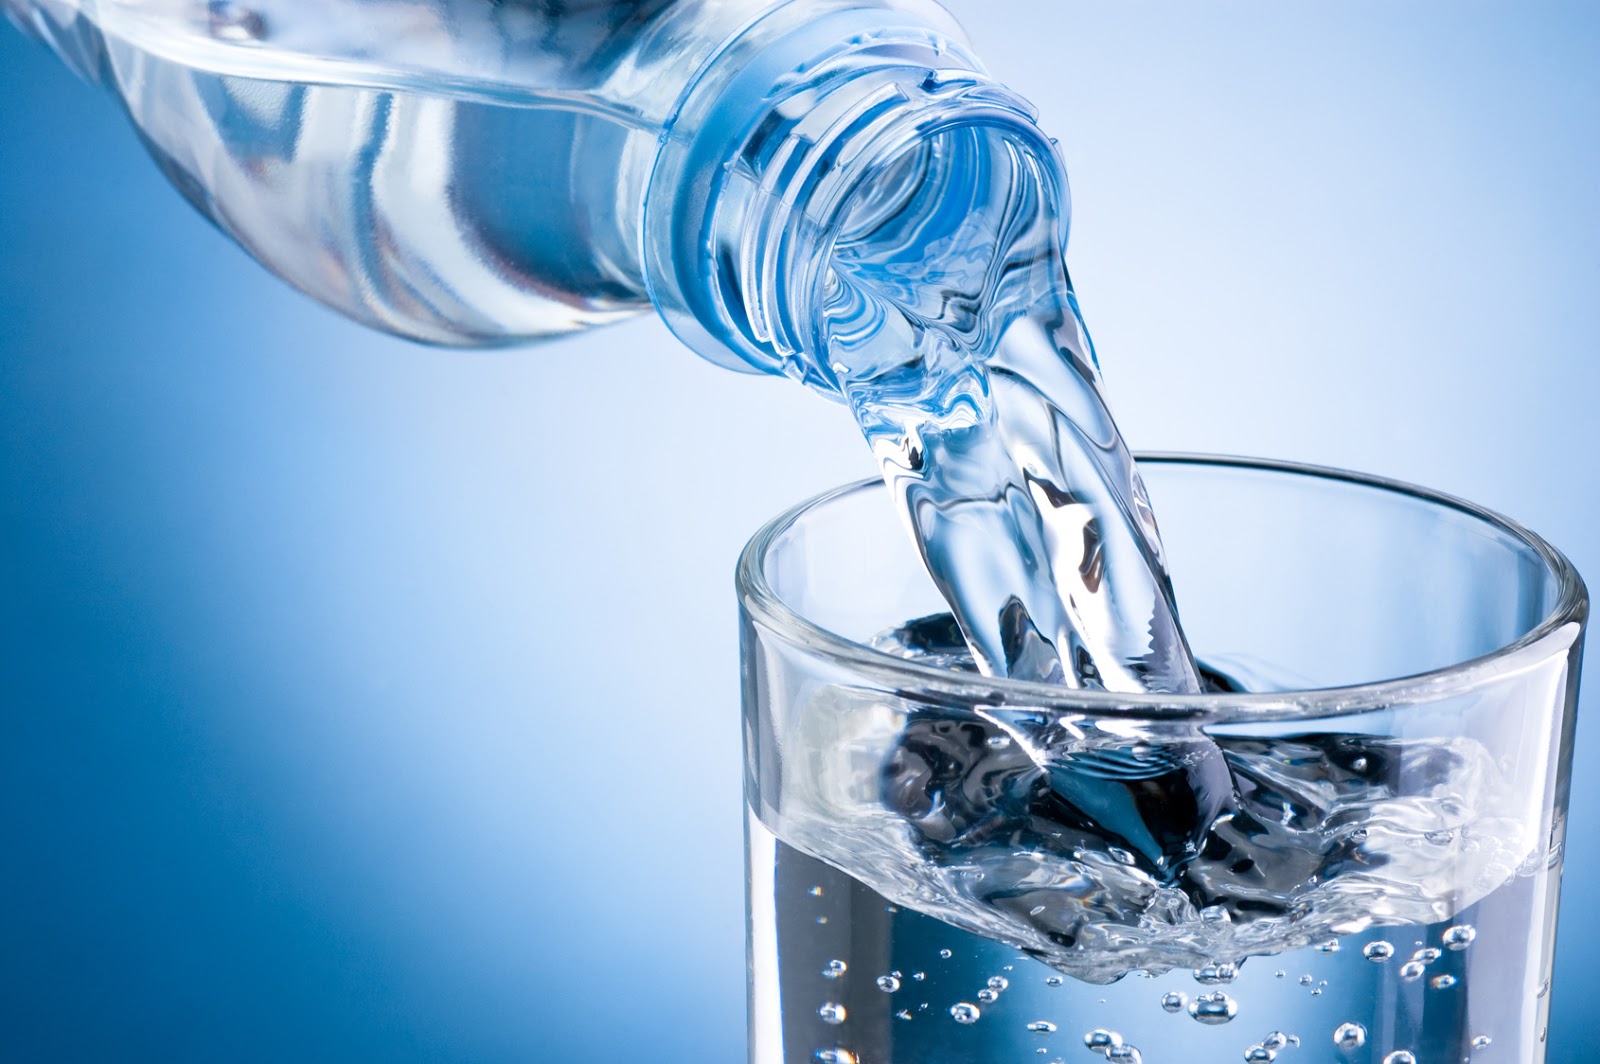 AguaEdén agua mineral, una mejor forma de beber agua